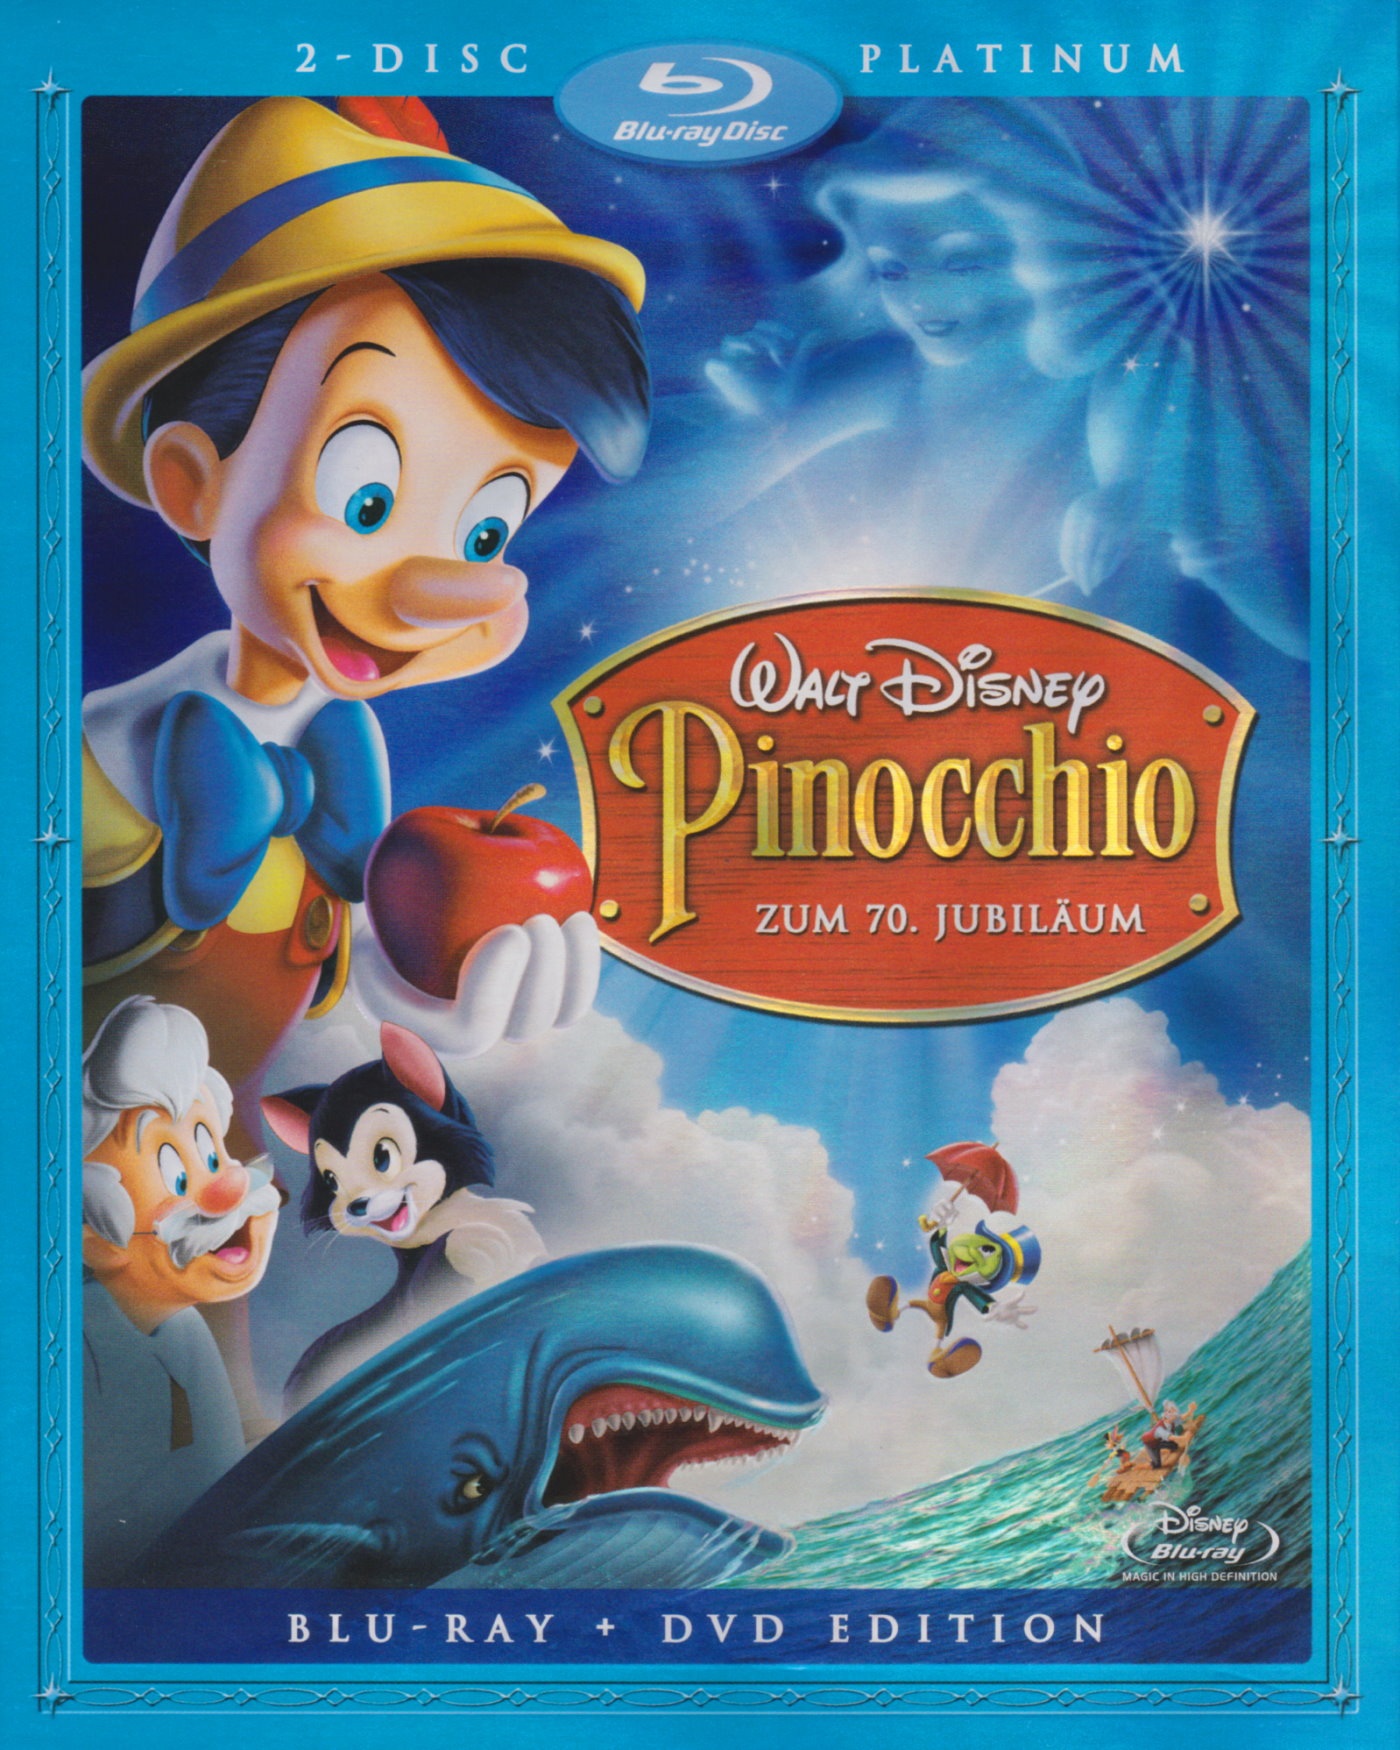 Cover - Pinocchio.jpg